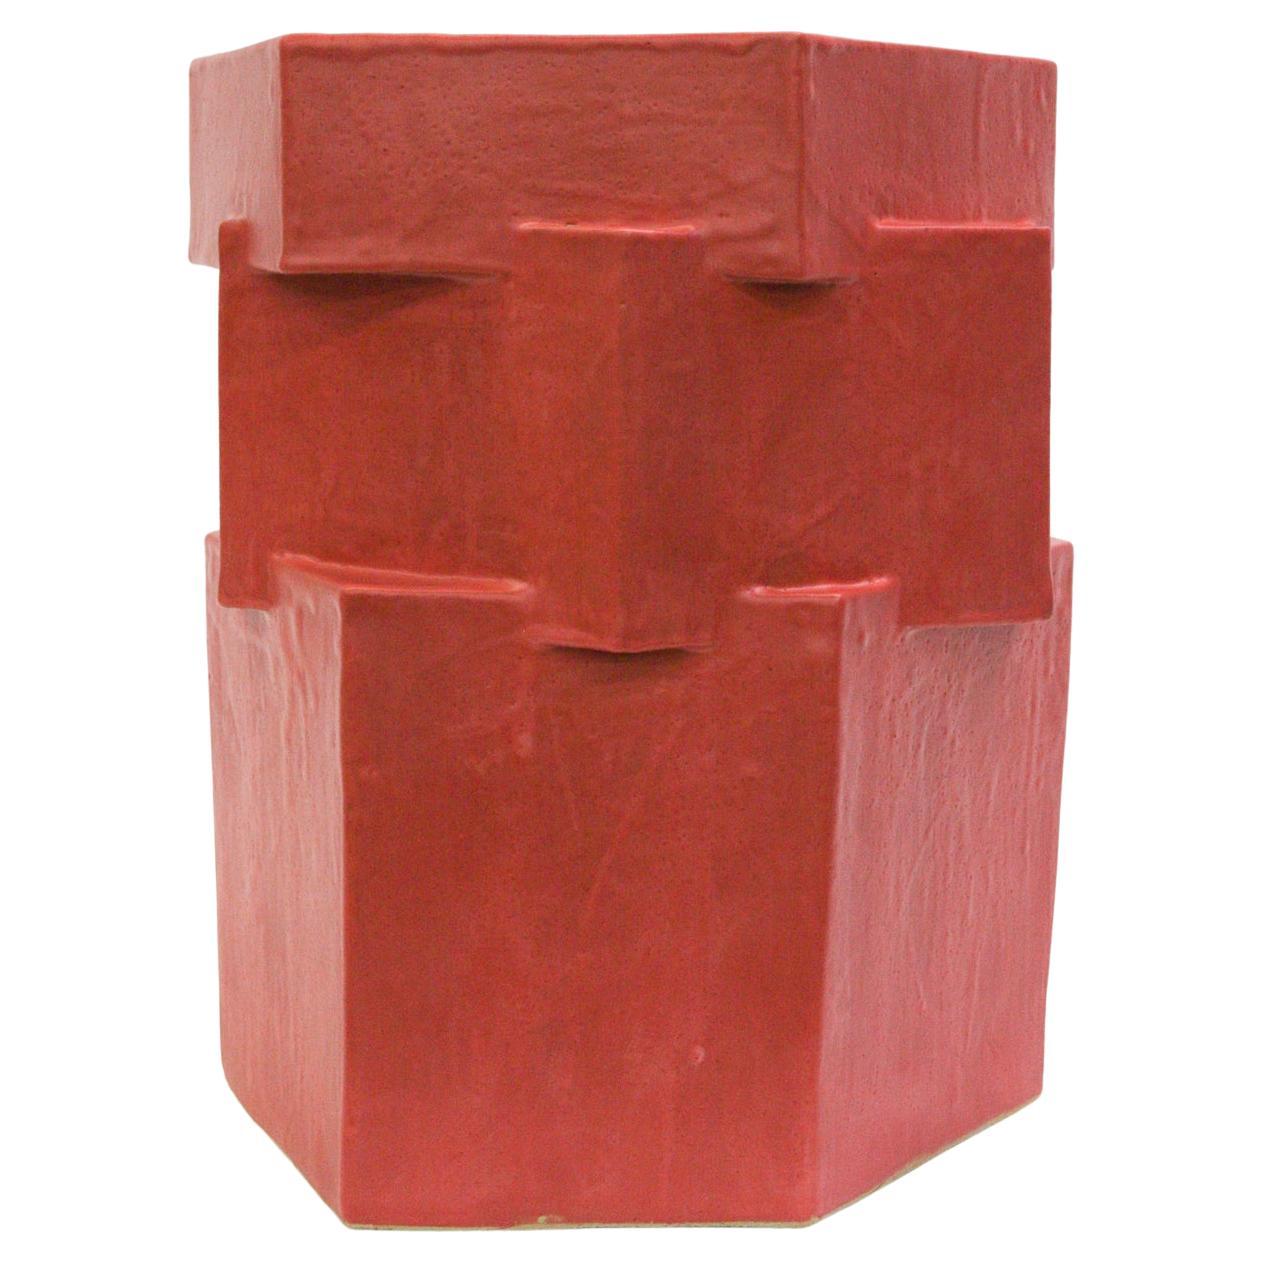 Three-Tier Ceramic Hex Planter in Cherry Red by Bzippy